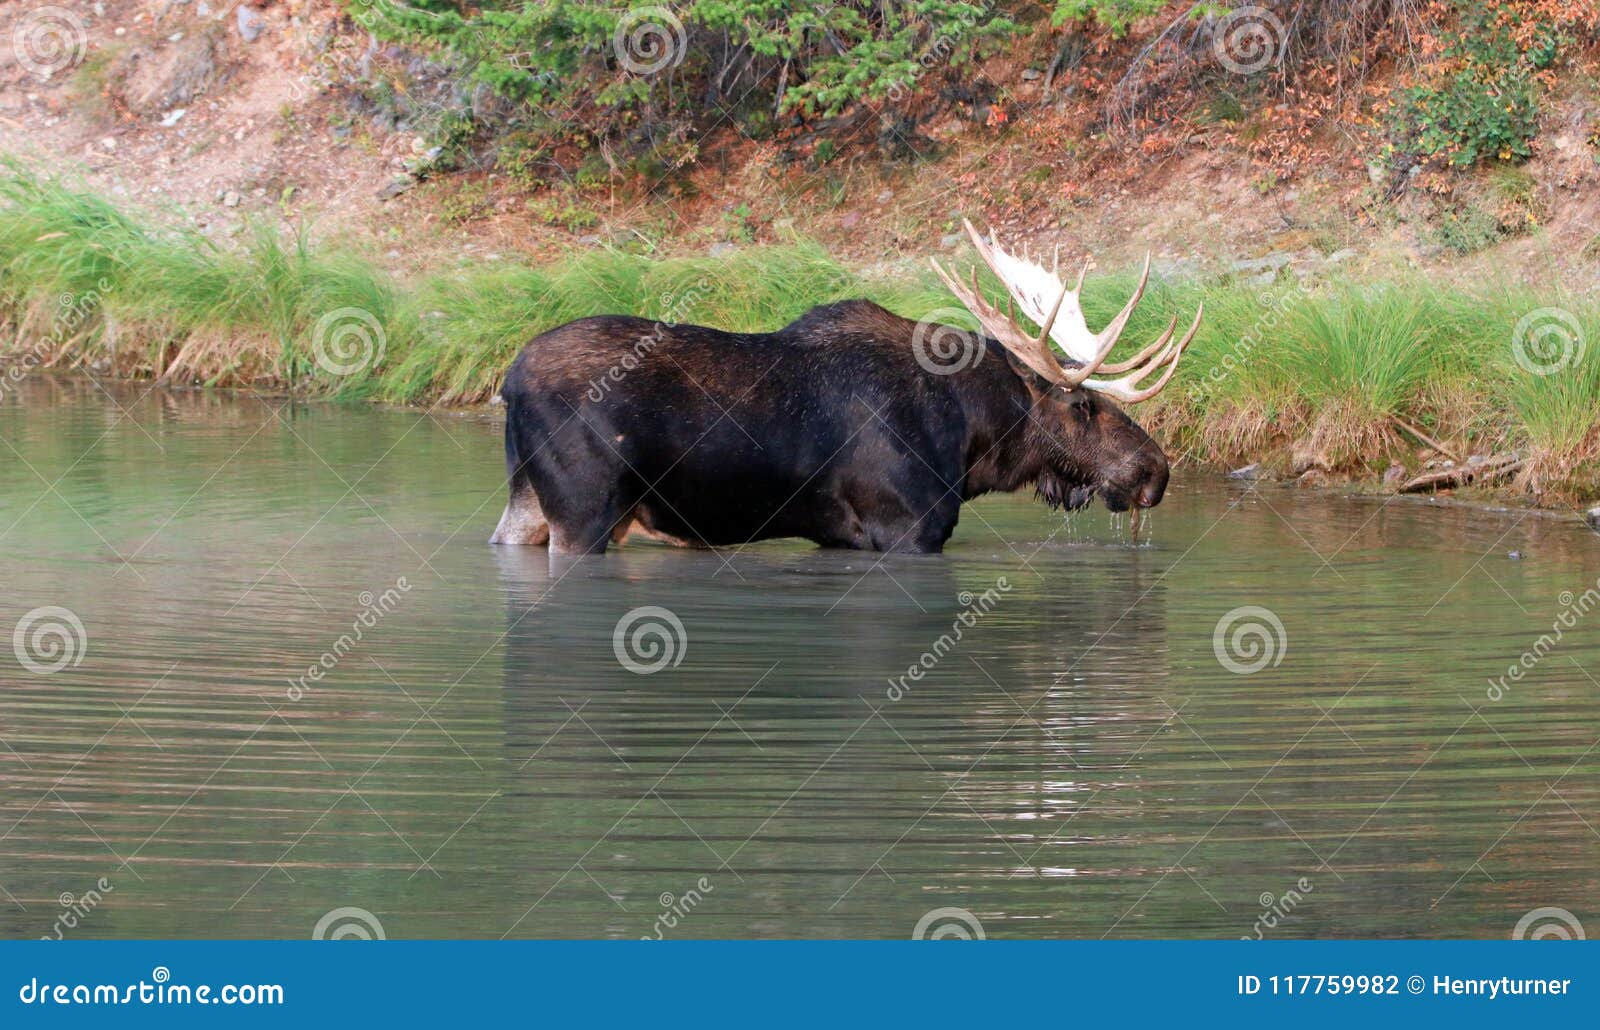 shiras bull moose near shore of fishercap lake in the many glacier region of glacier national park in montana usa